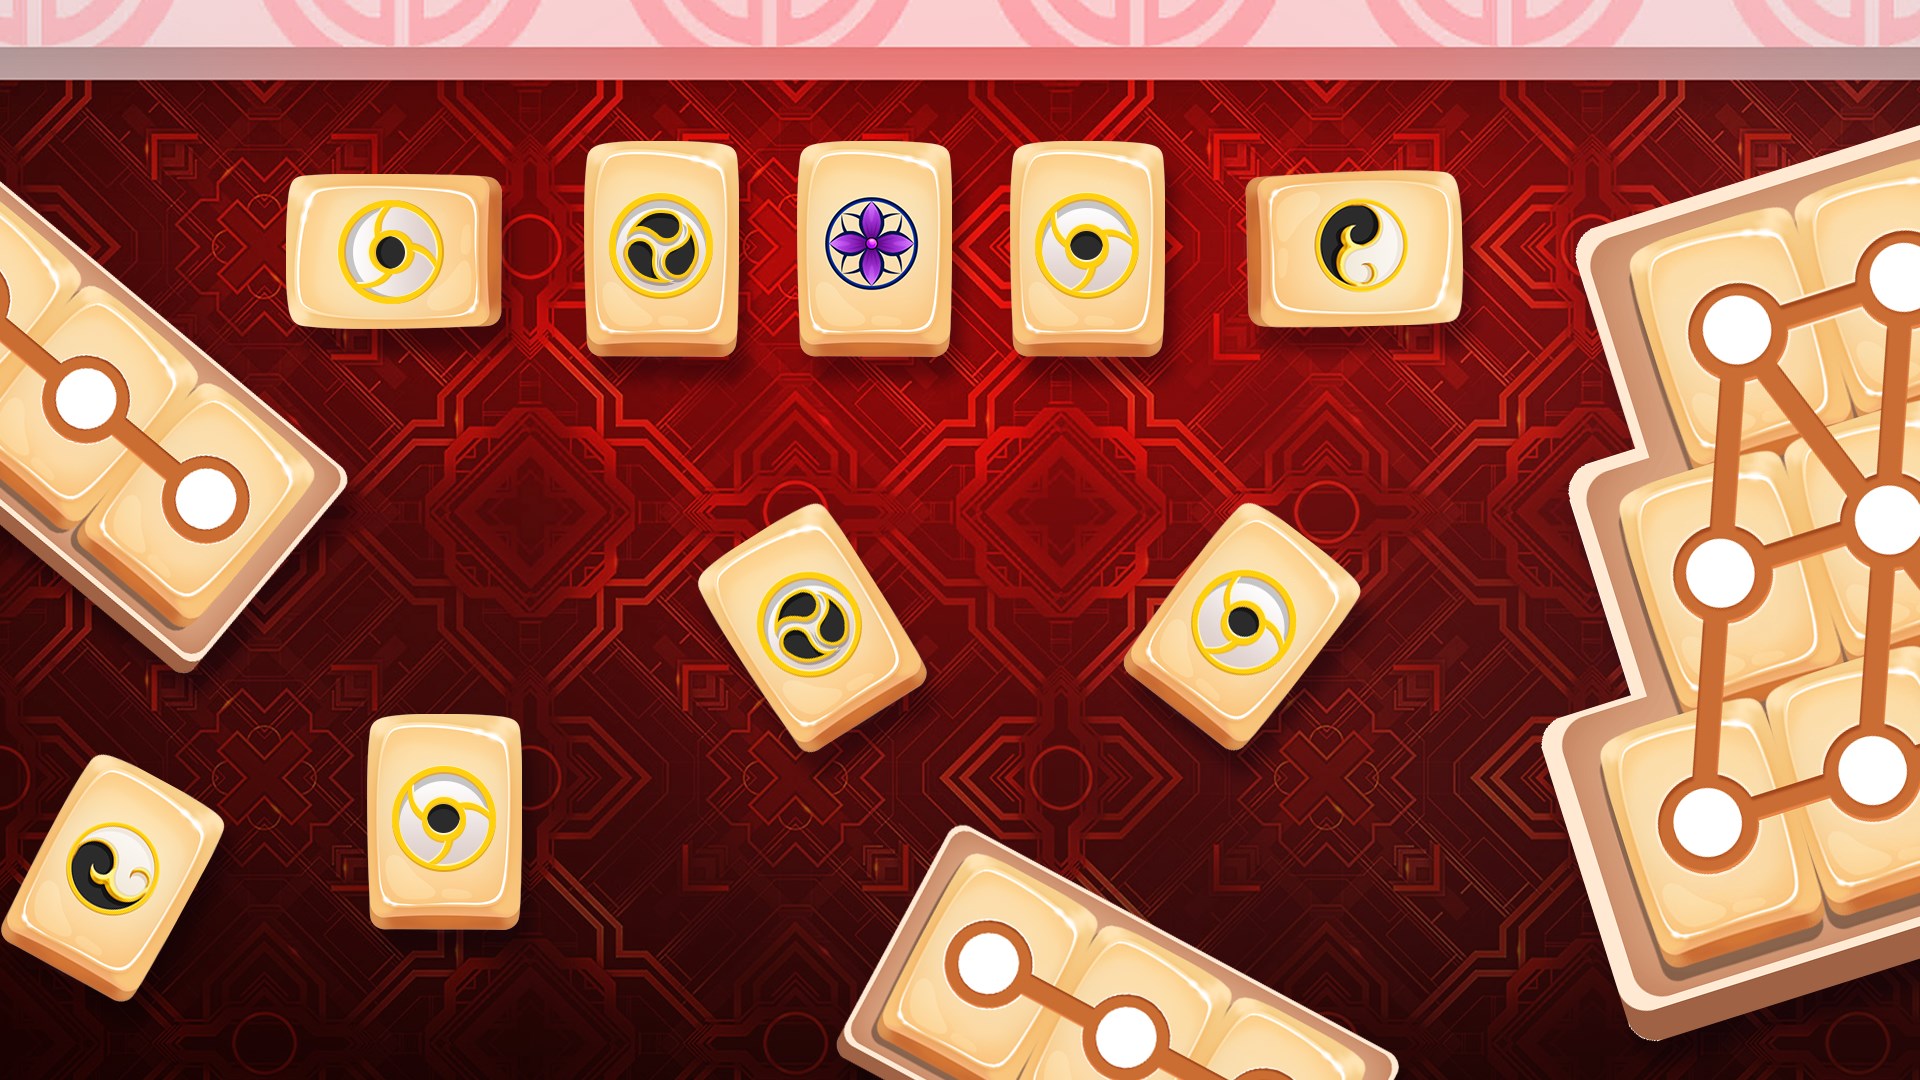 EZ Mahjong - juega Mahjong gratis pantalla completa!